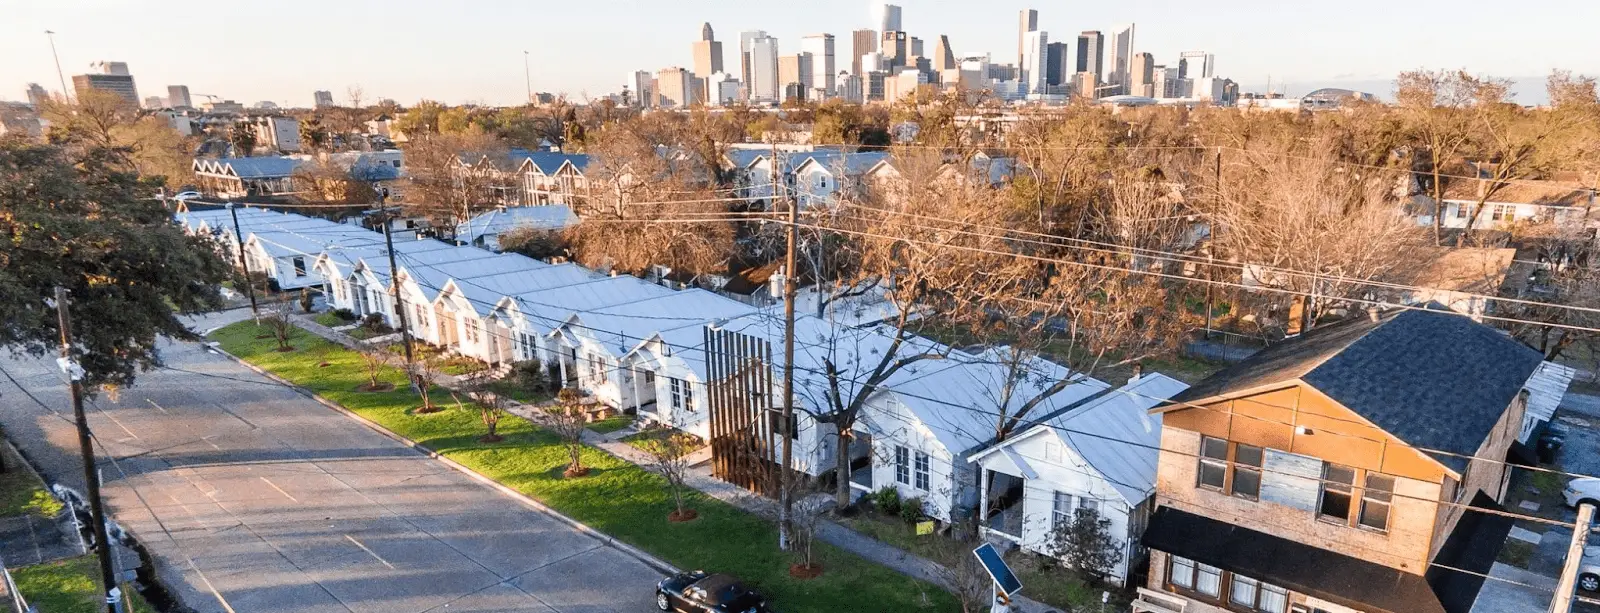 project row houses Houston